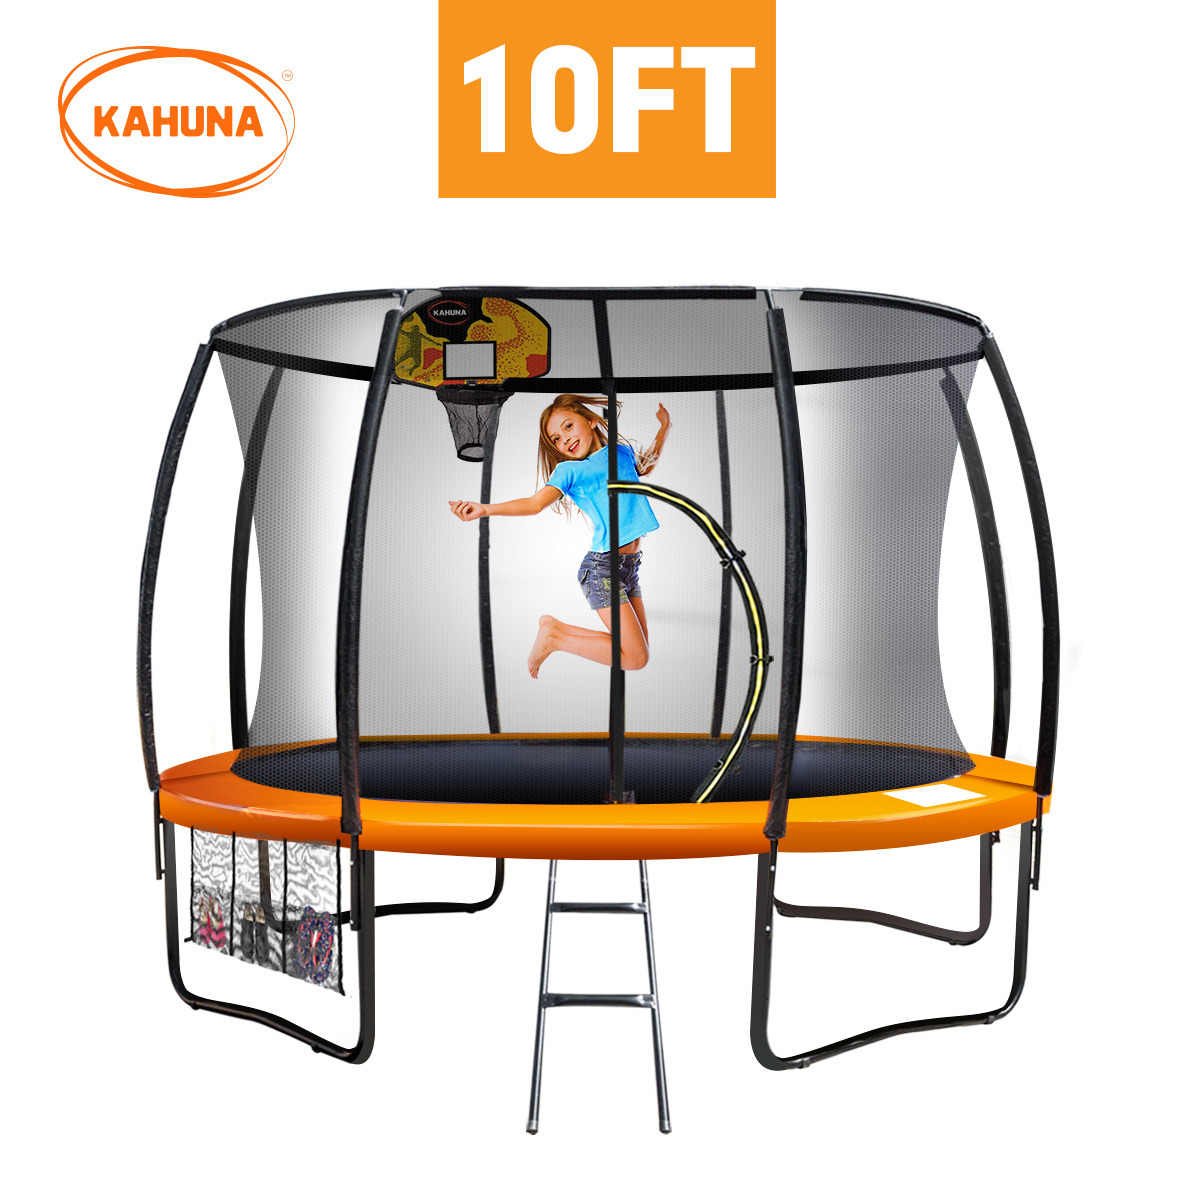 Kahuna Trampoline 10ft with  Basket ball set